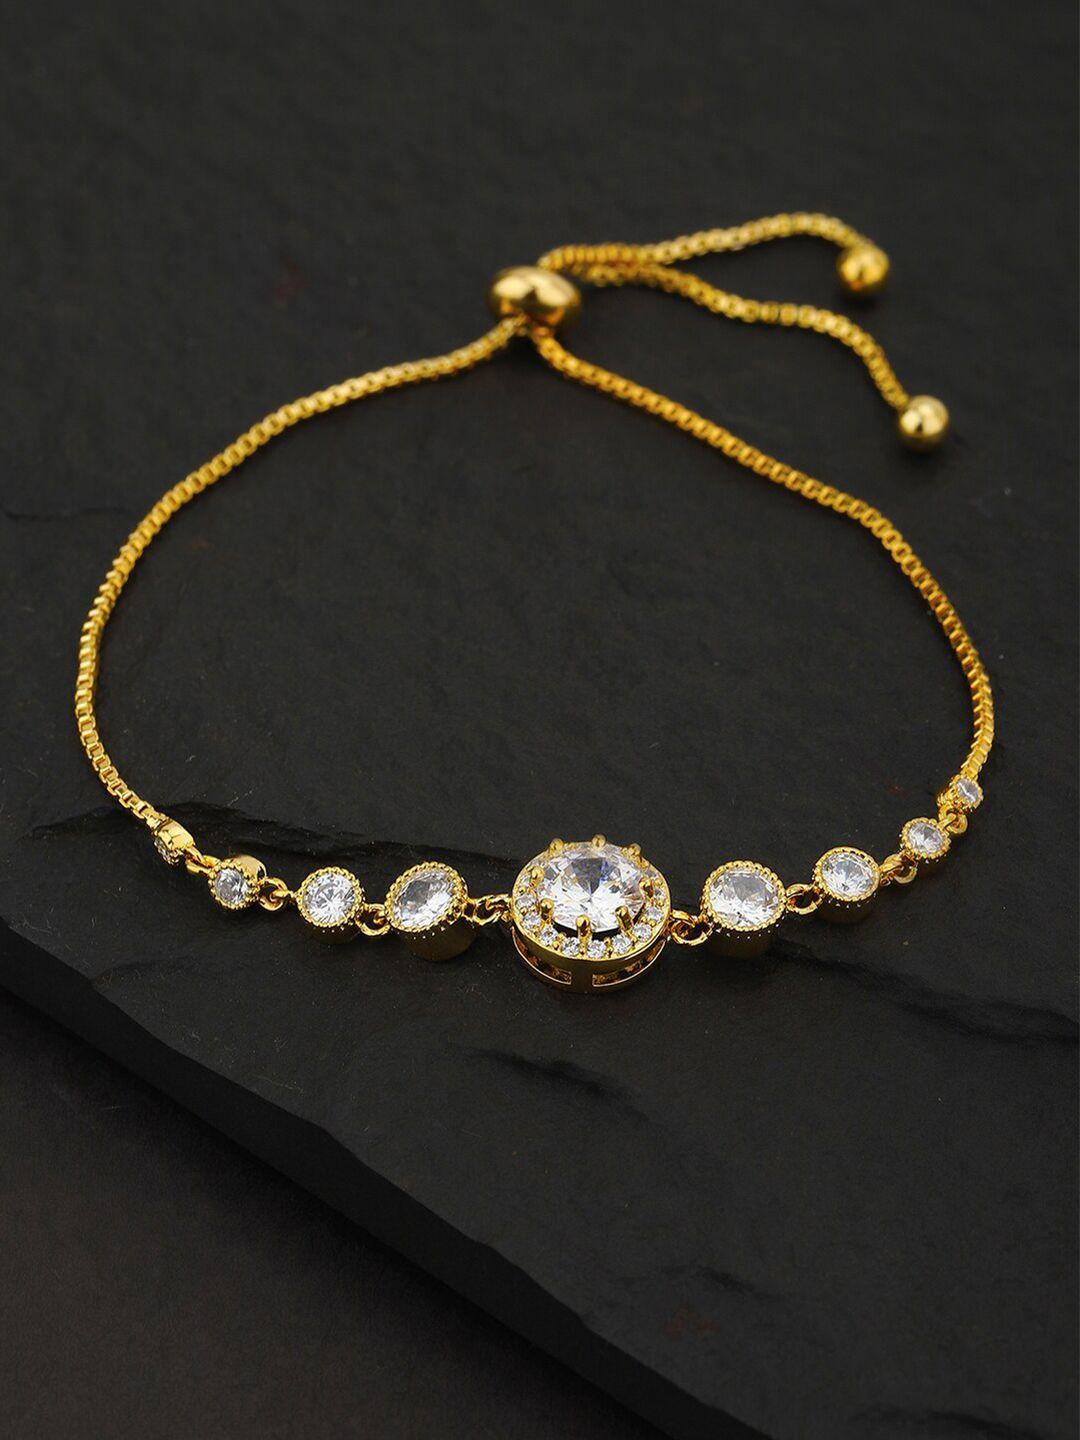 carlton london women gold plated bracelet